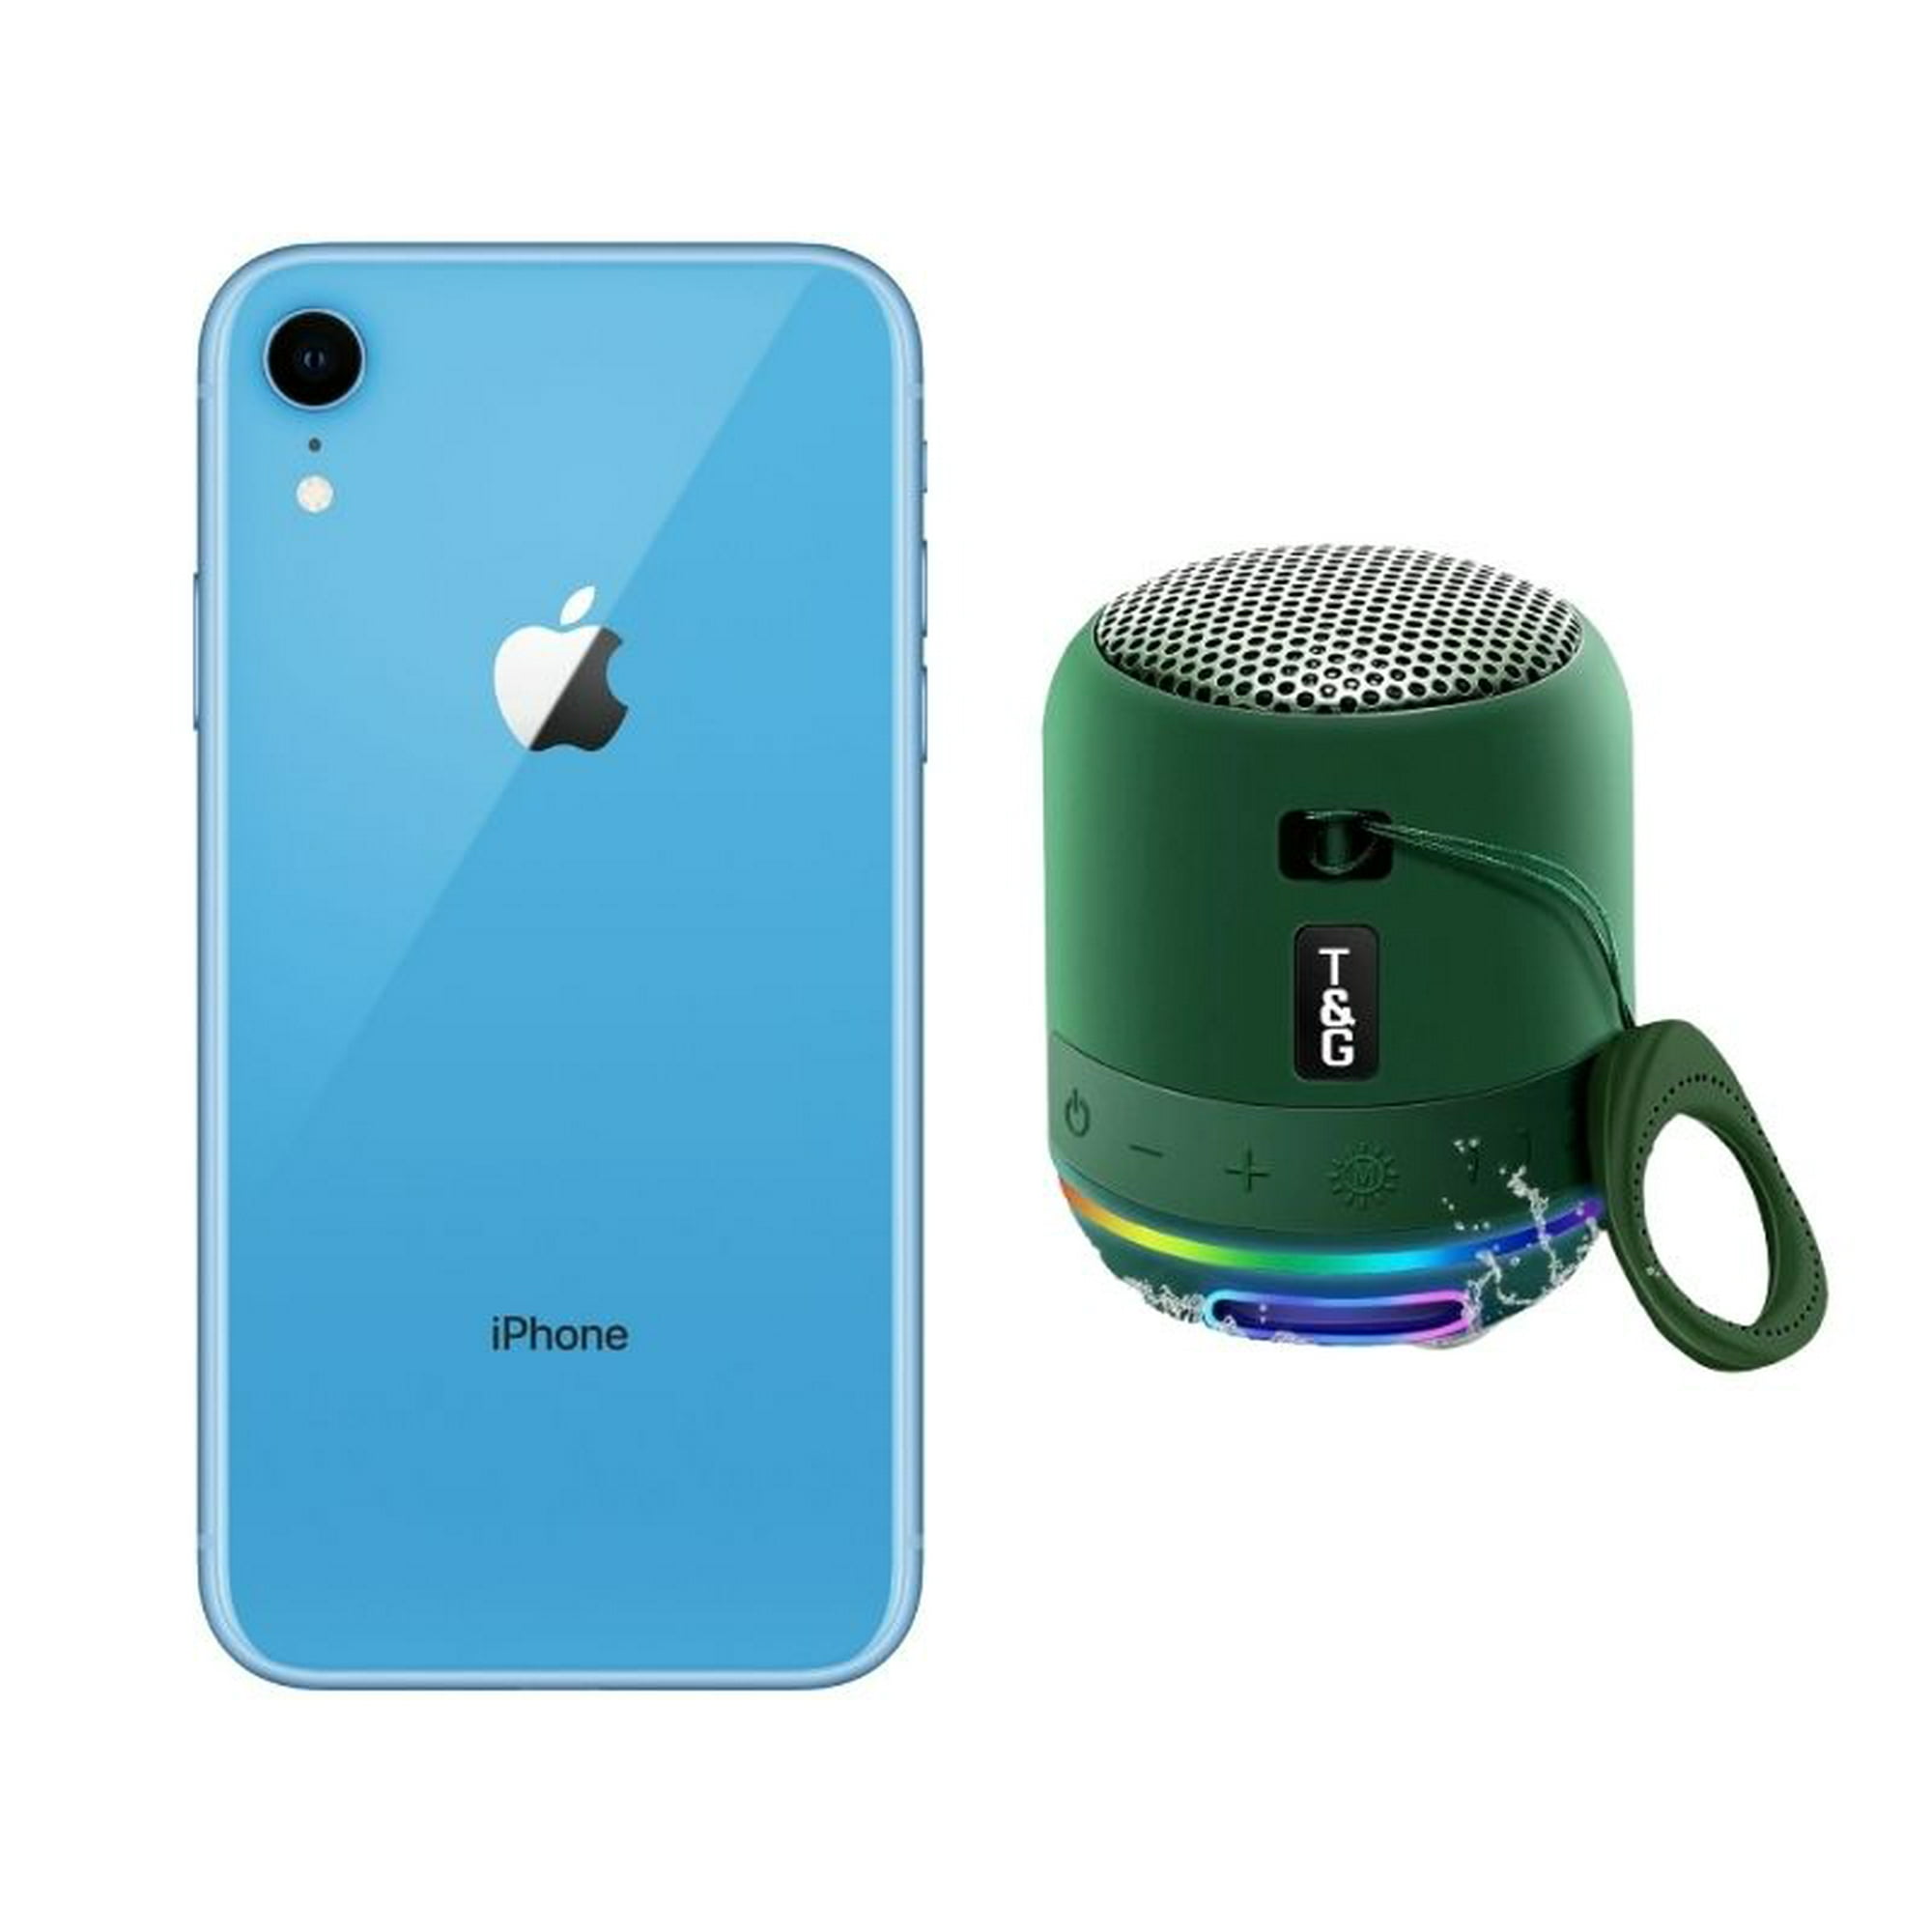 iPhone XR 64GB Reacondicionado Azul + Soporte Cargador Apple iPhone iPhone  XR